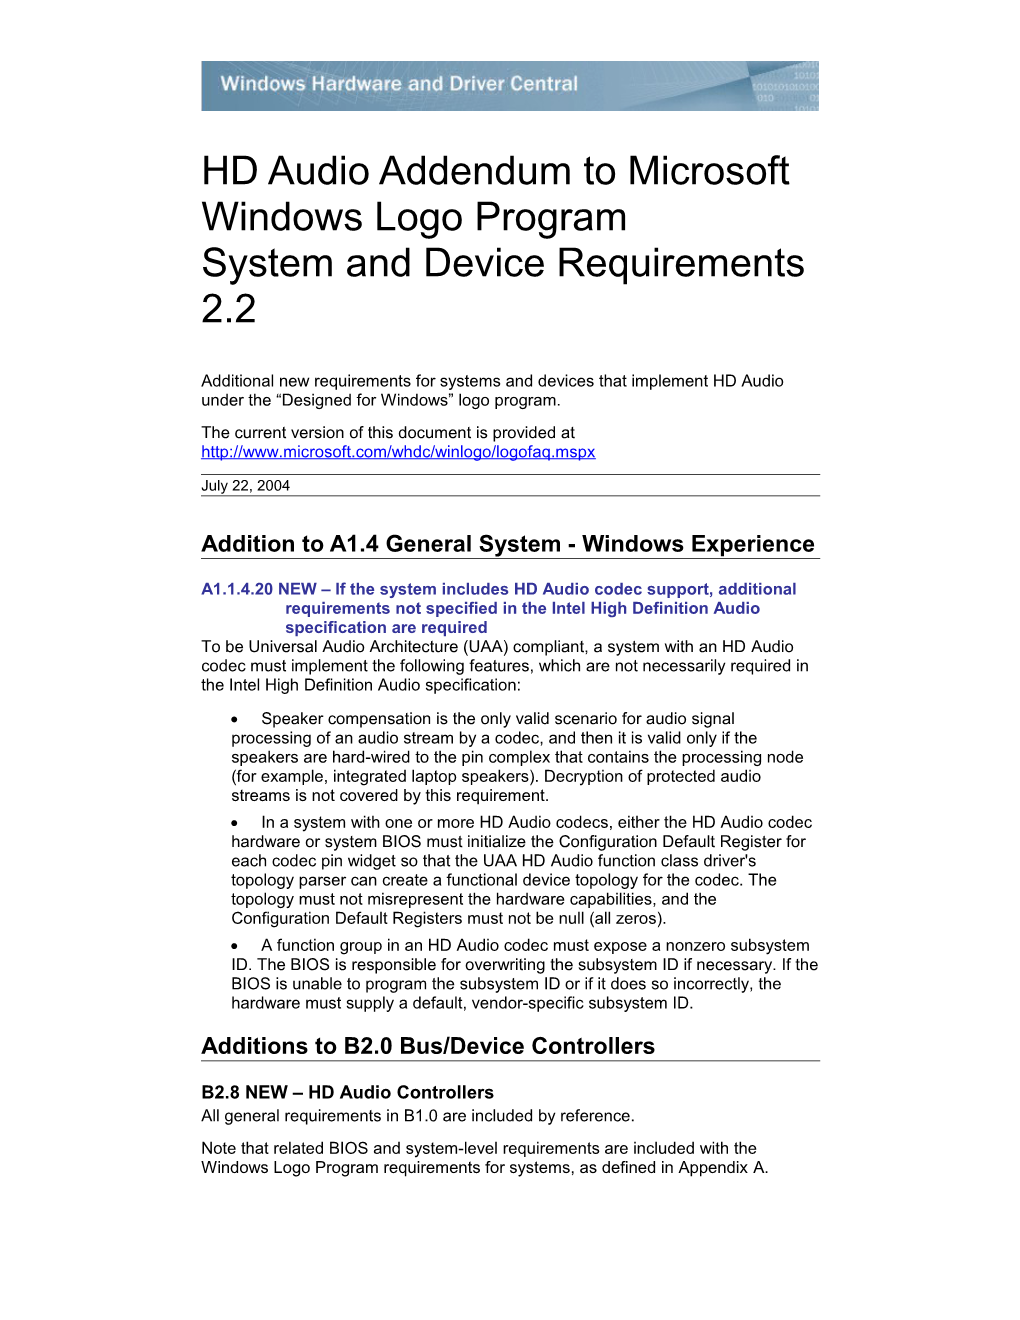 HD Audio Addendum to Microsoft Windows Logo Program System and Device Requirements 2.2